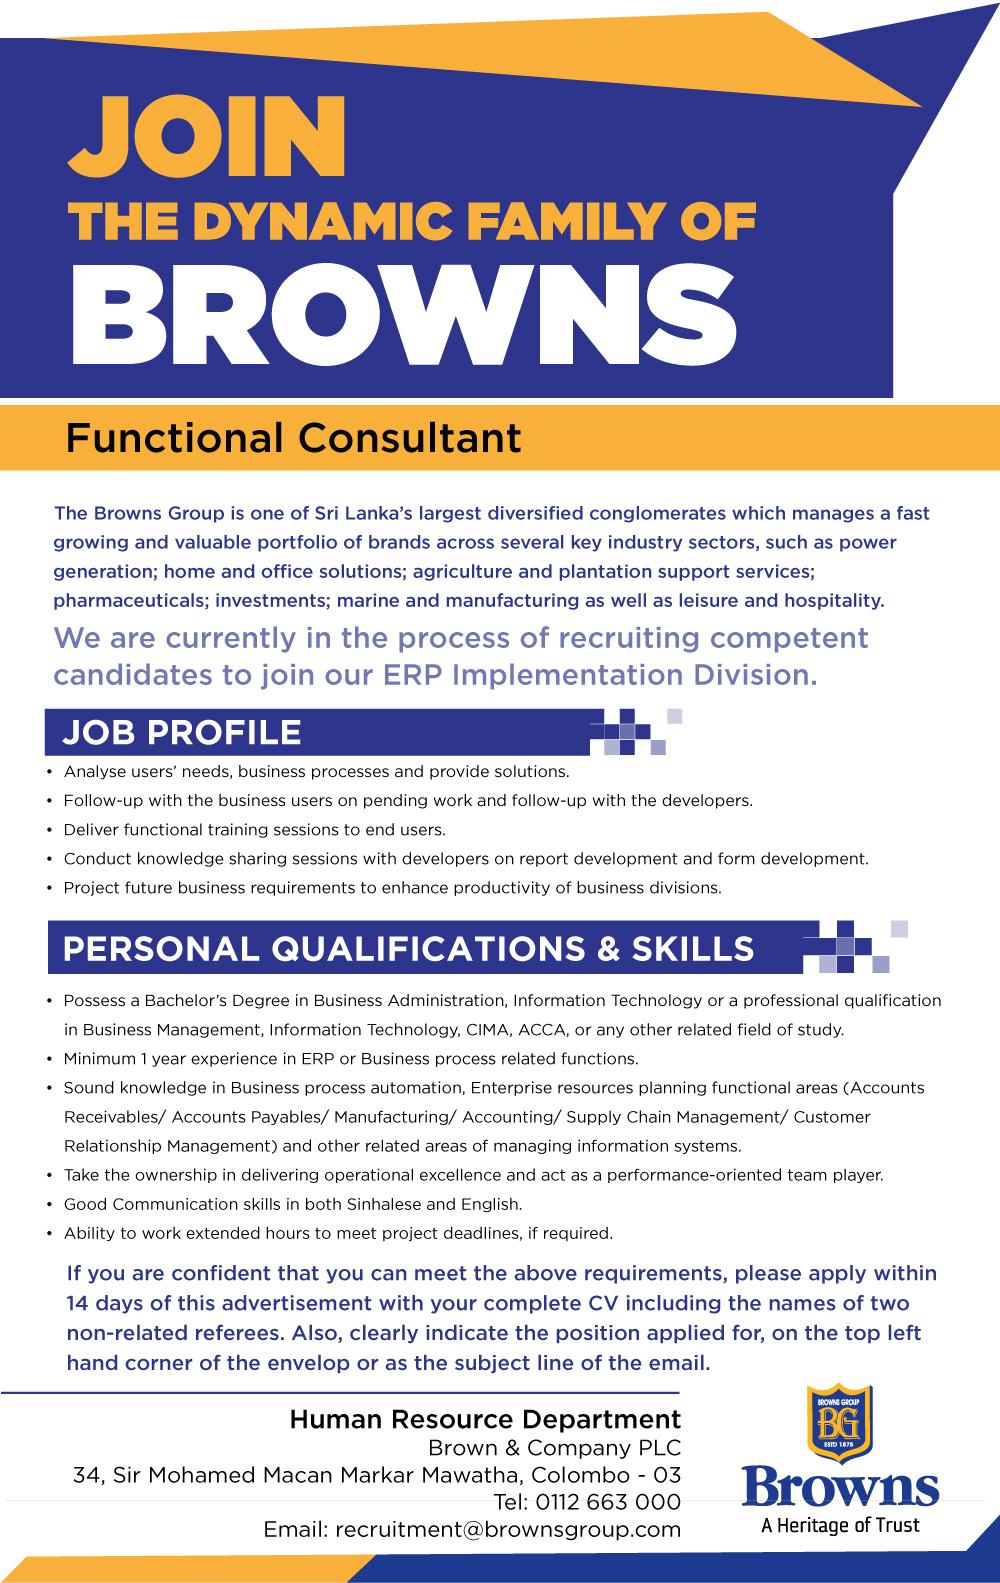 Functional Consultant Jobs Vacancies – Brown and Company PLC Job Vacancy Details